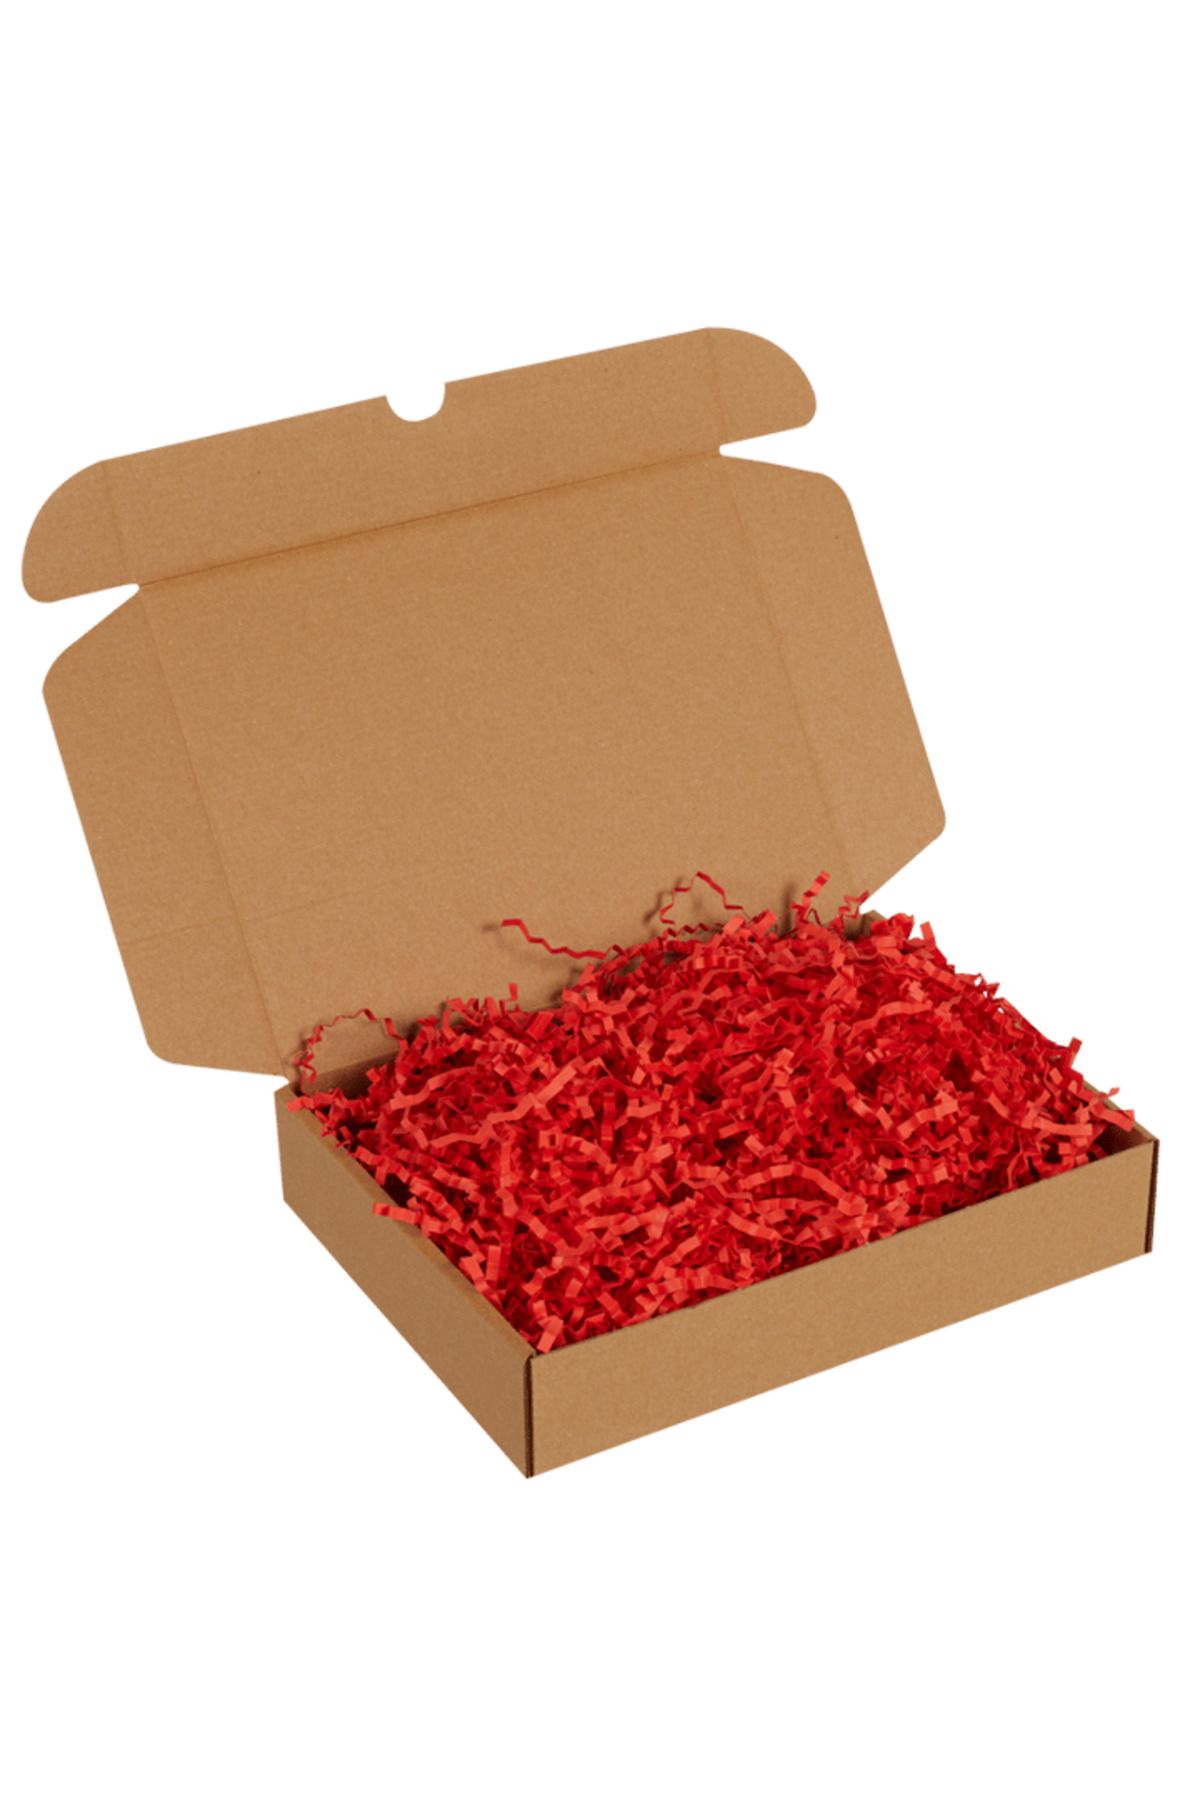 Packanya Kırmızı Kırpık Kağıt ( Zigzag Kağıt ) - 50 gr